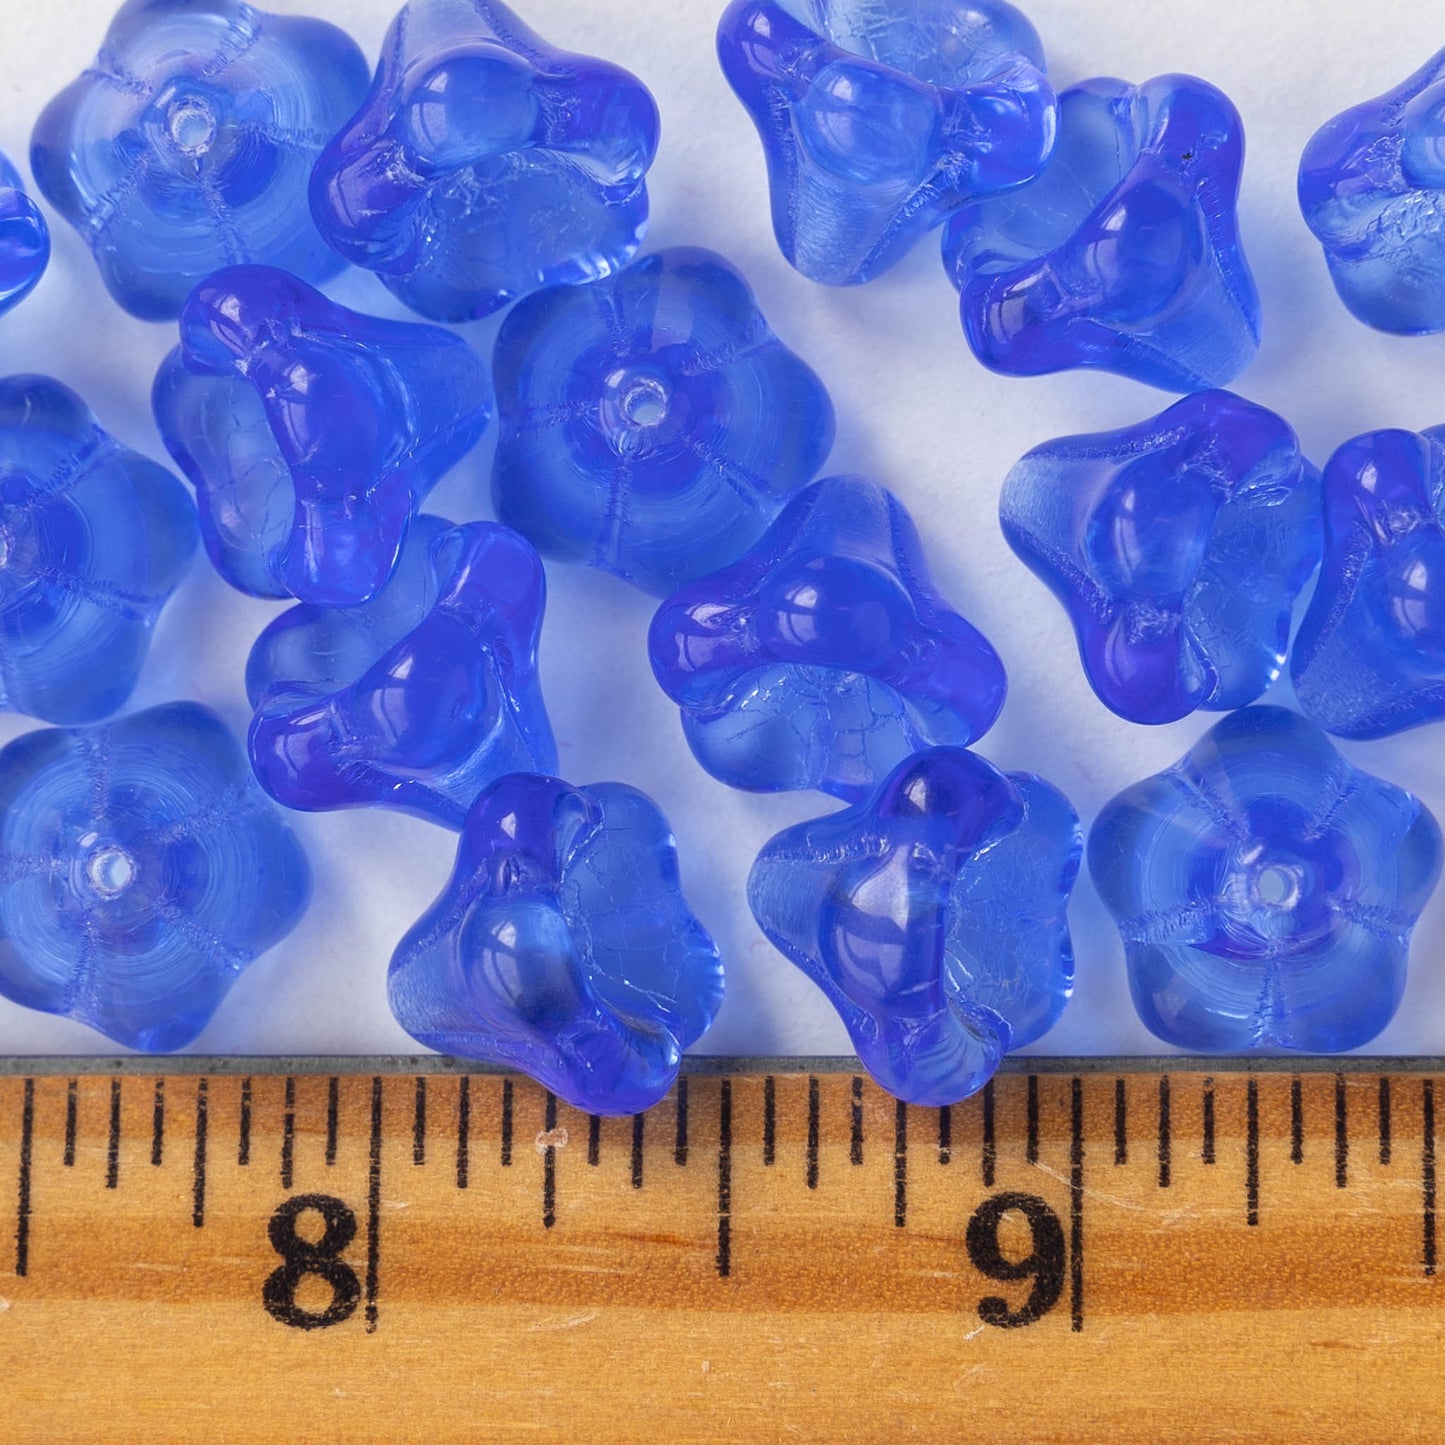 10x12mm Trumpet Flower Beads - Transparent Blue - 10 or 30